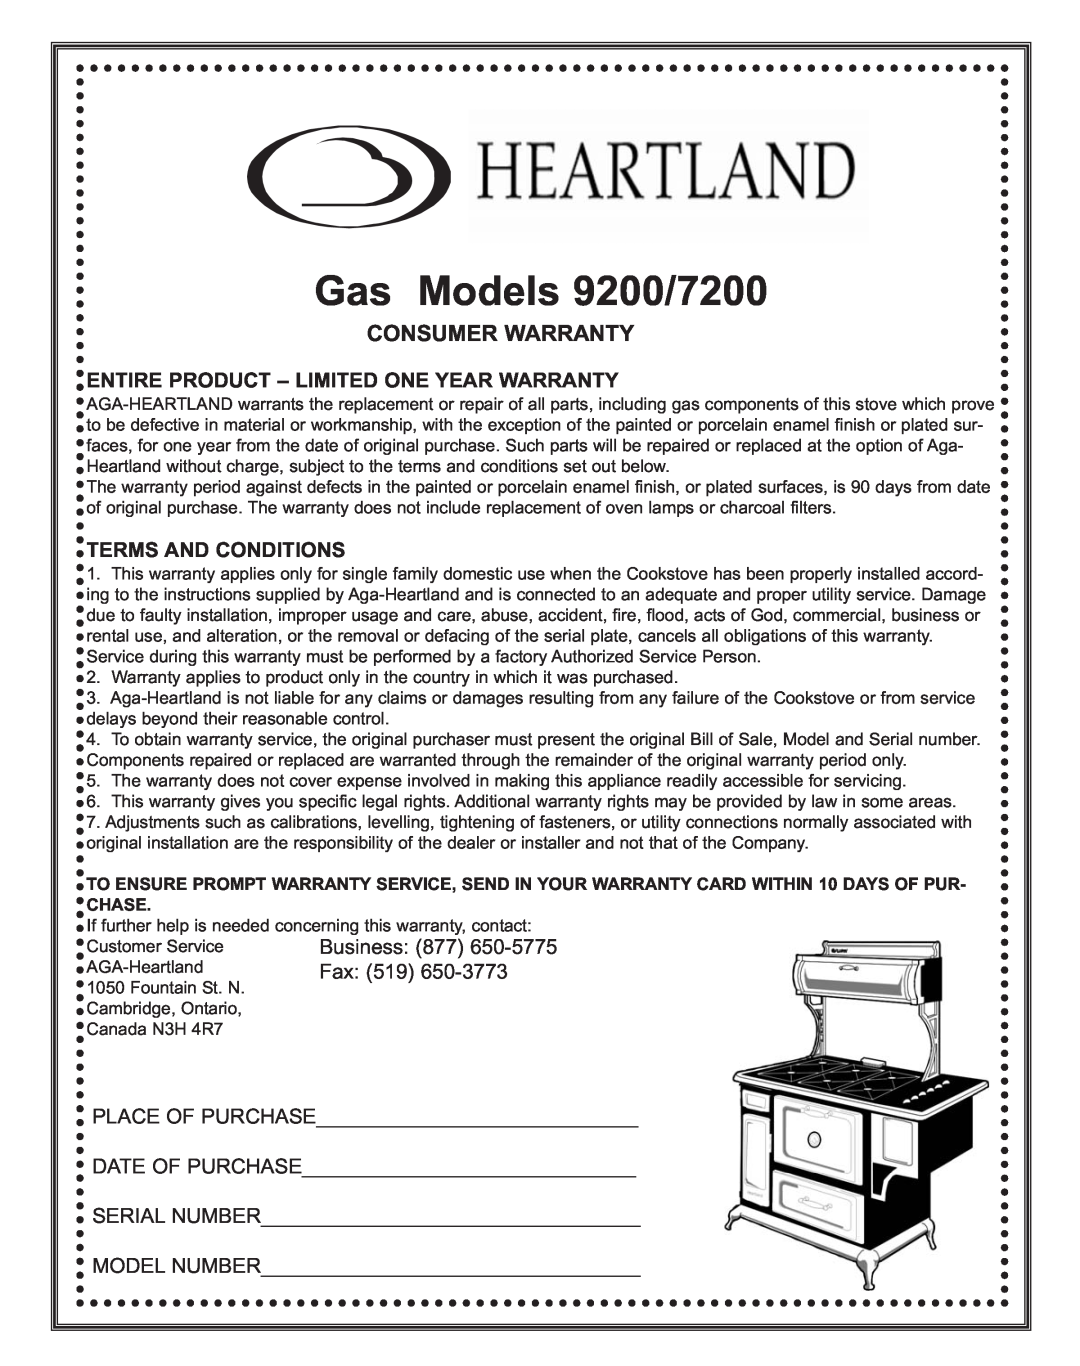 Heartland Bakeware manual Gas Models 9200/7200, Consumer Warranty 